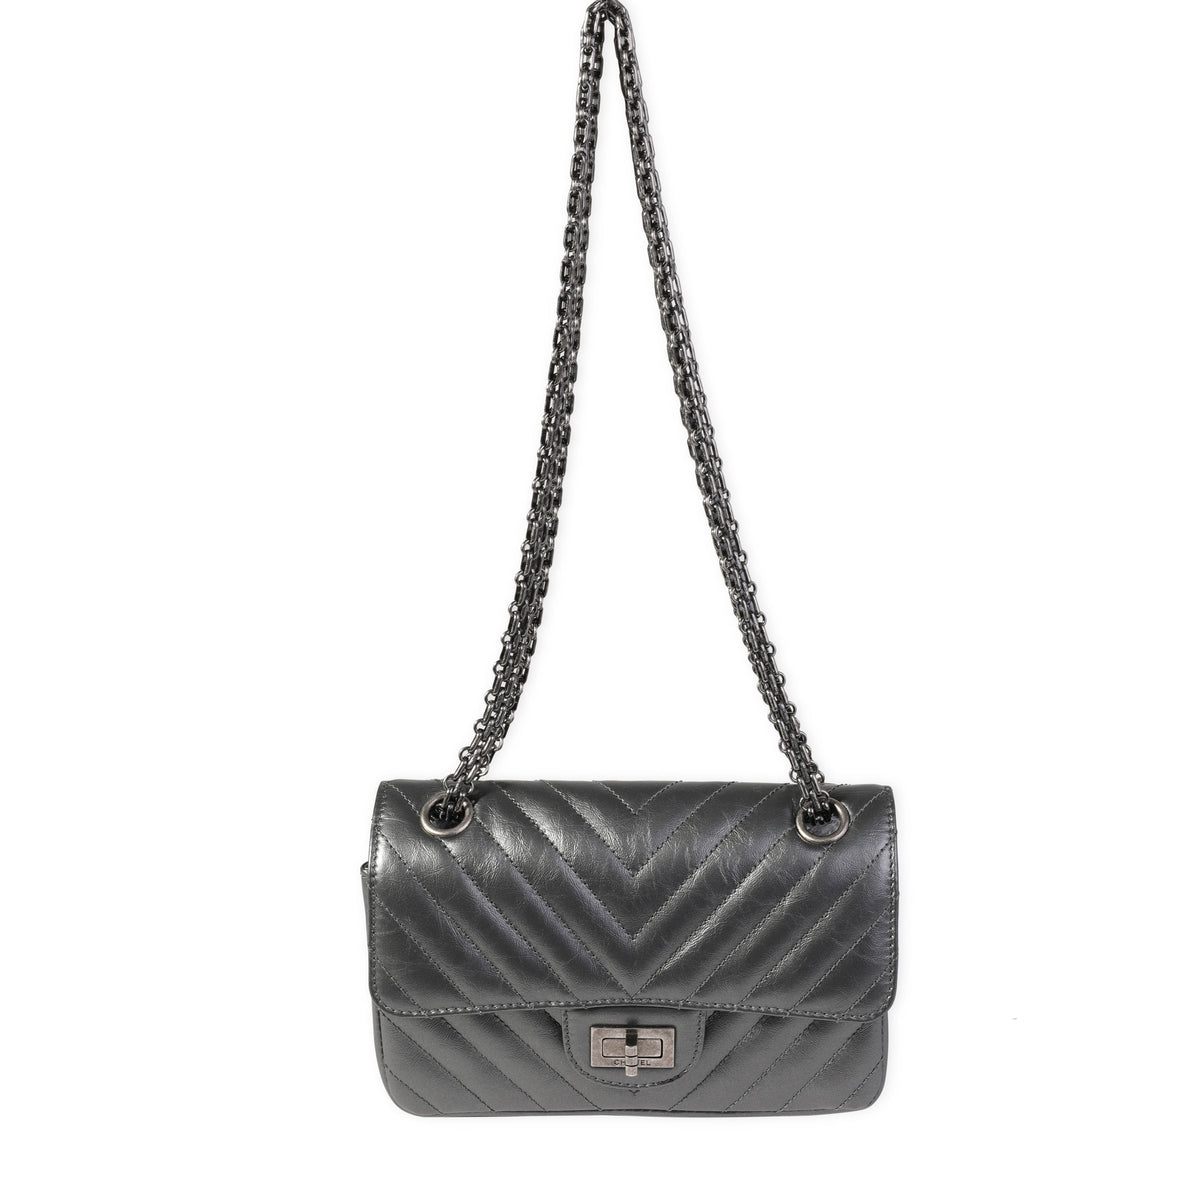 CHANEL 255 Bags  Handbags for Women  Authenticity Guaranteed  eBay